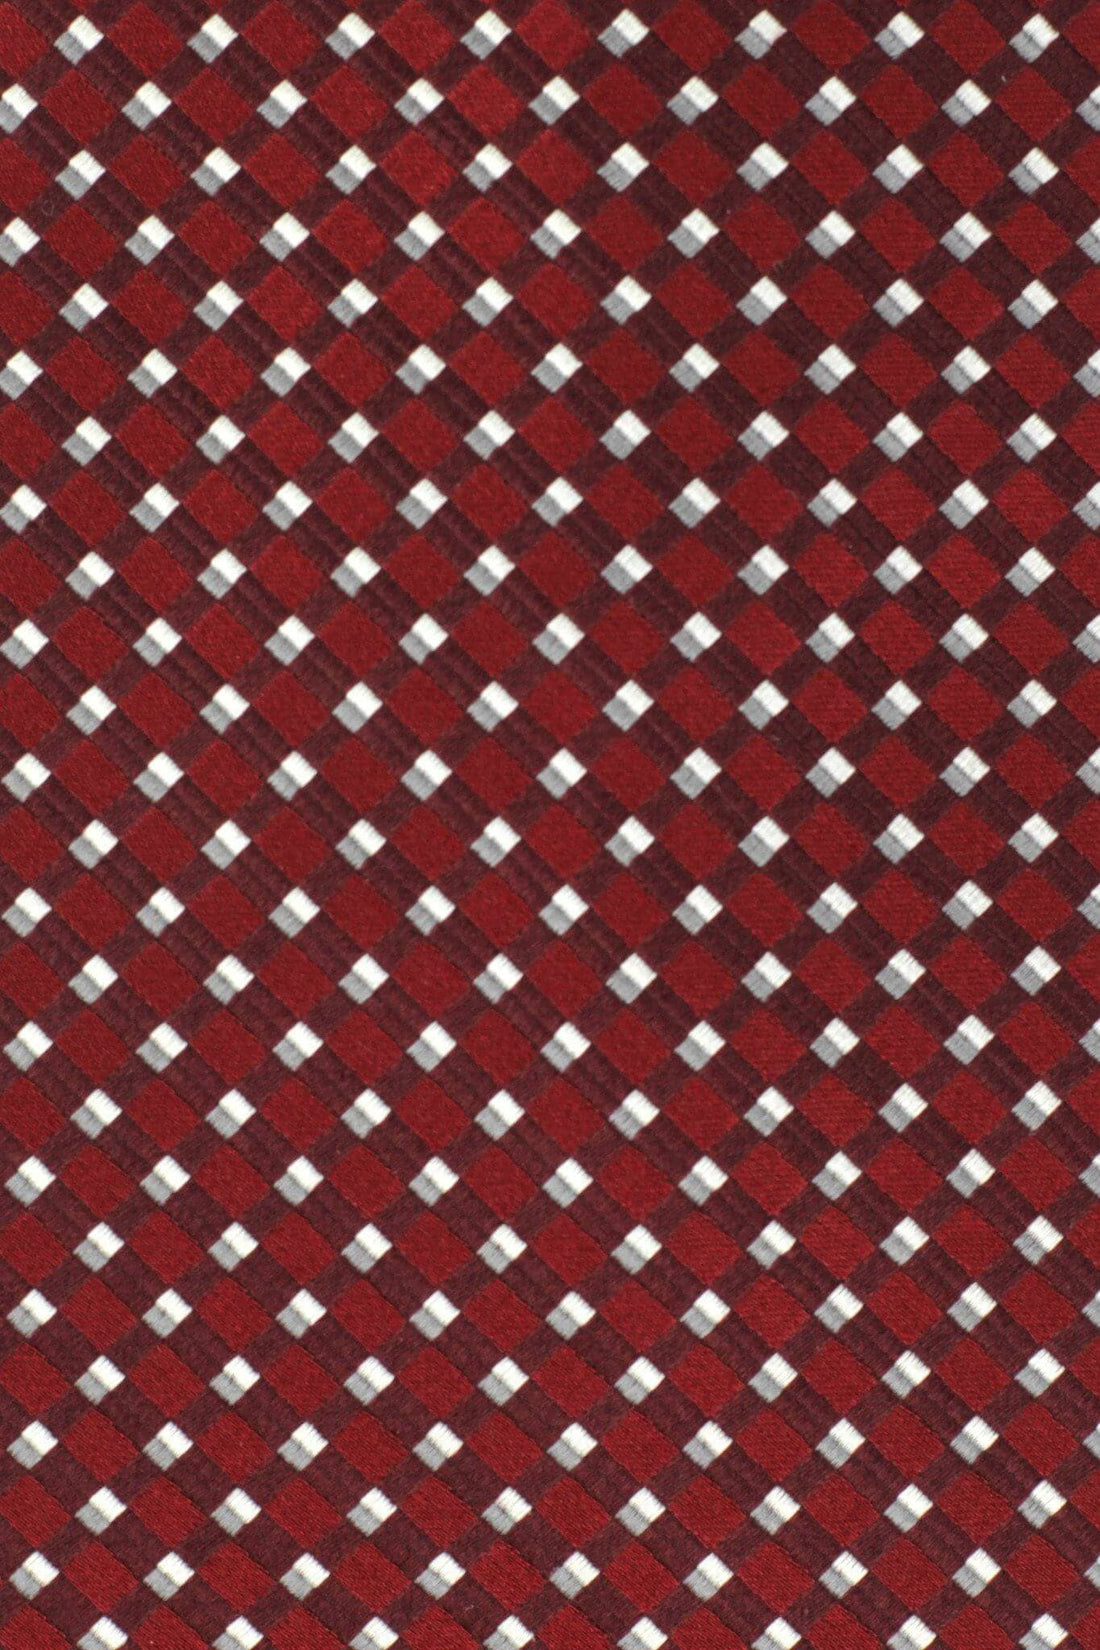 Burgundy Maroon silk fabric detail zoom shot